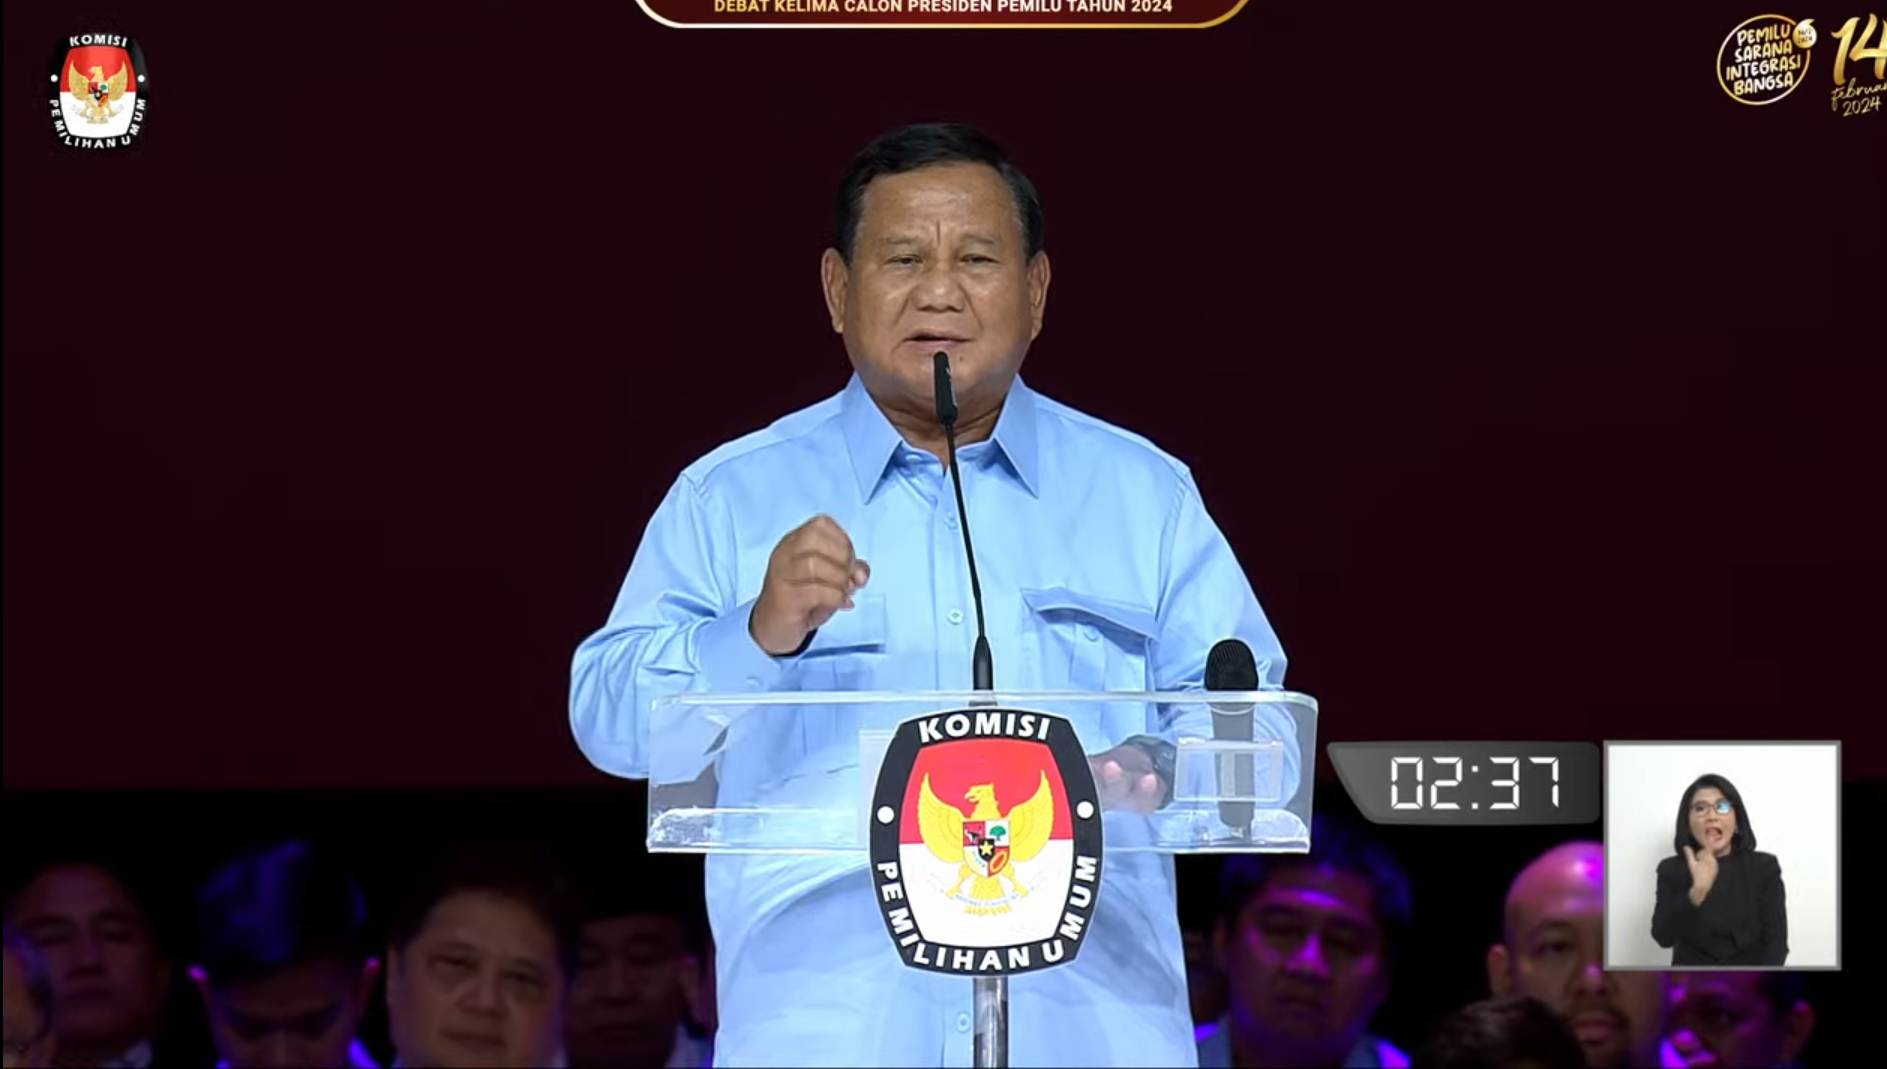 Debat Pilpres Terakhir, Prabowo Perkenalkan Konsep Strategi Transformasi Bangsa. Apa Maknanya?